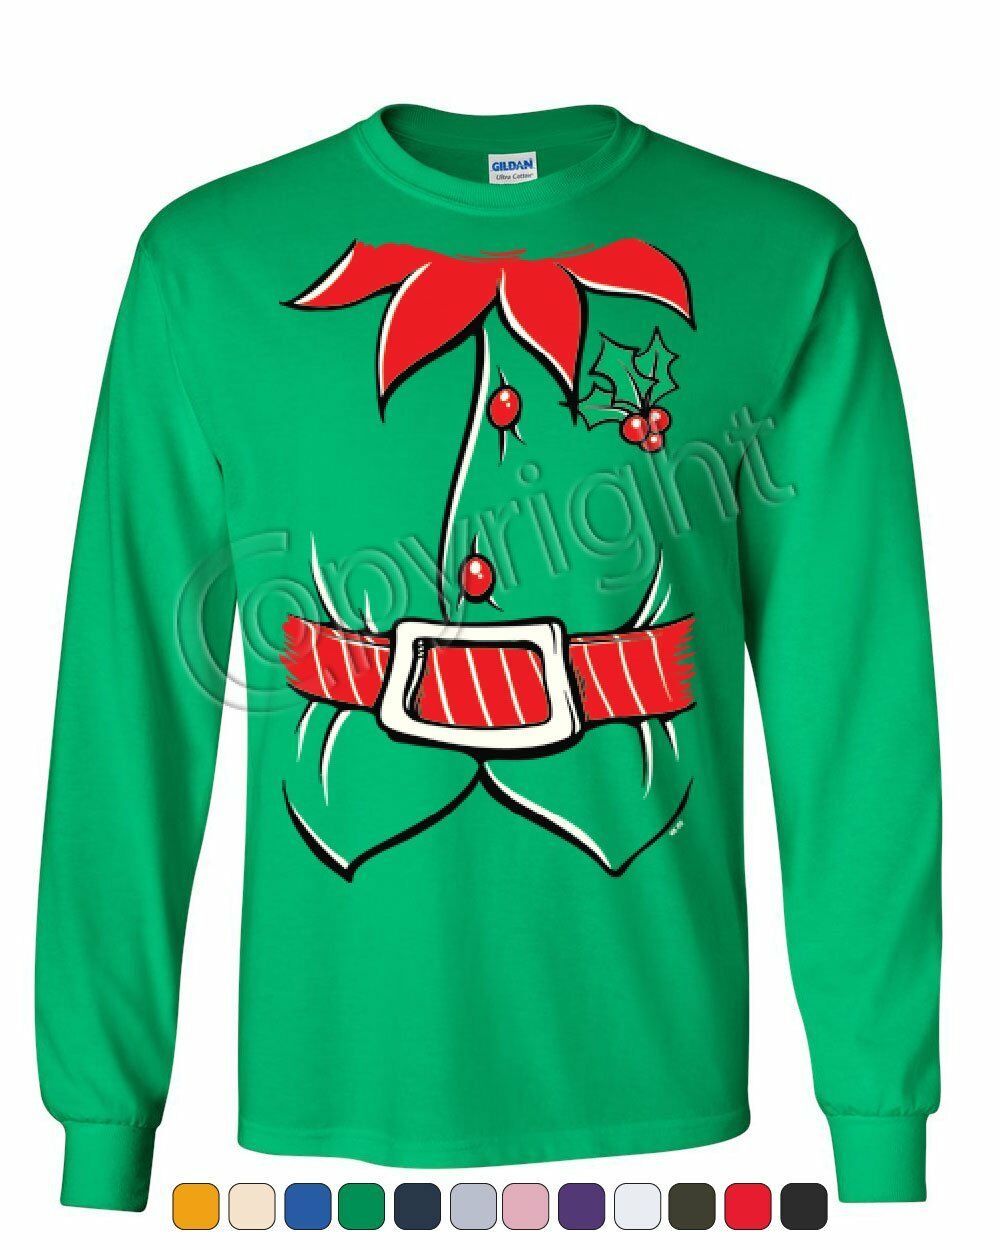 Elf Shirt Long Sleeve T-Shirt Funny Christmas Xmas New Year Holiday